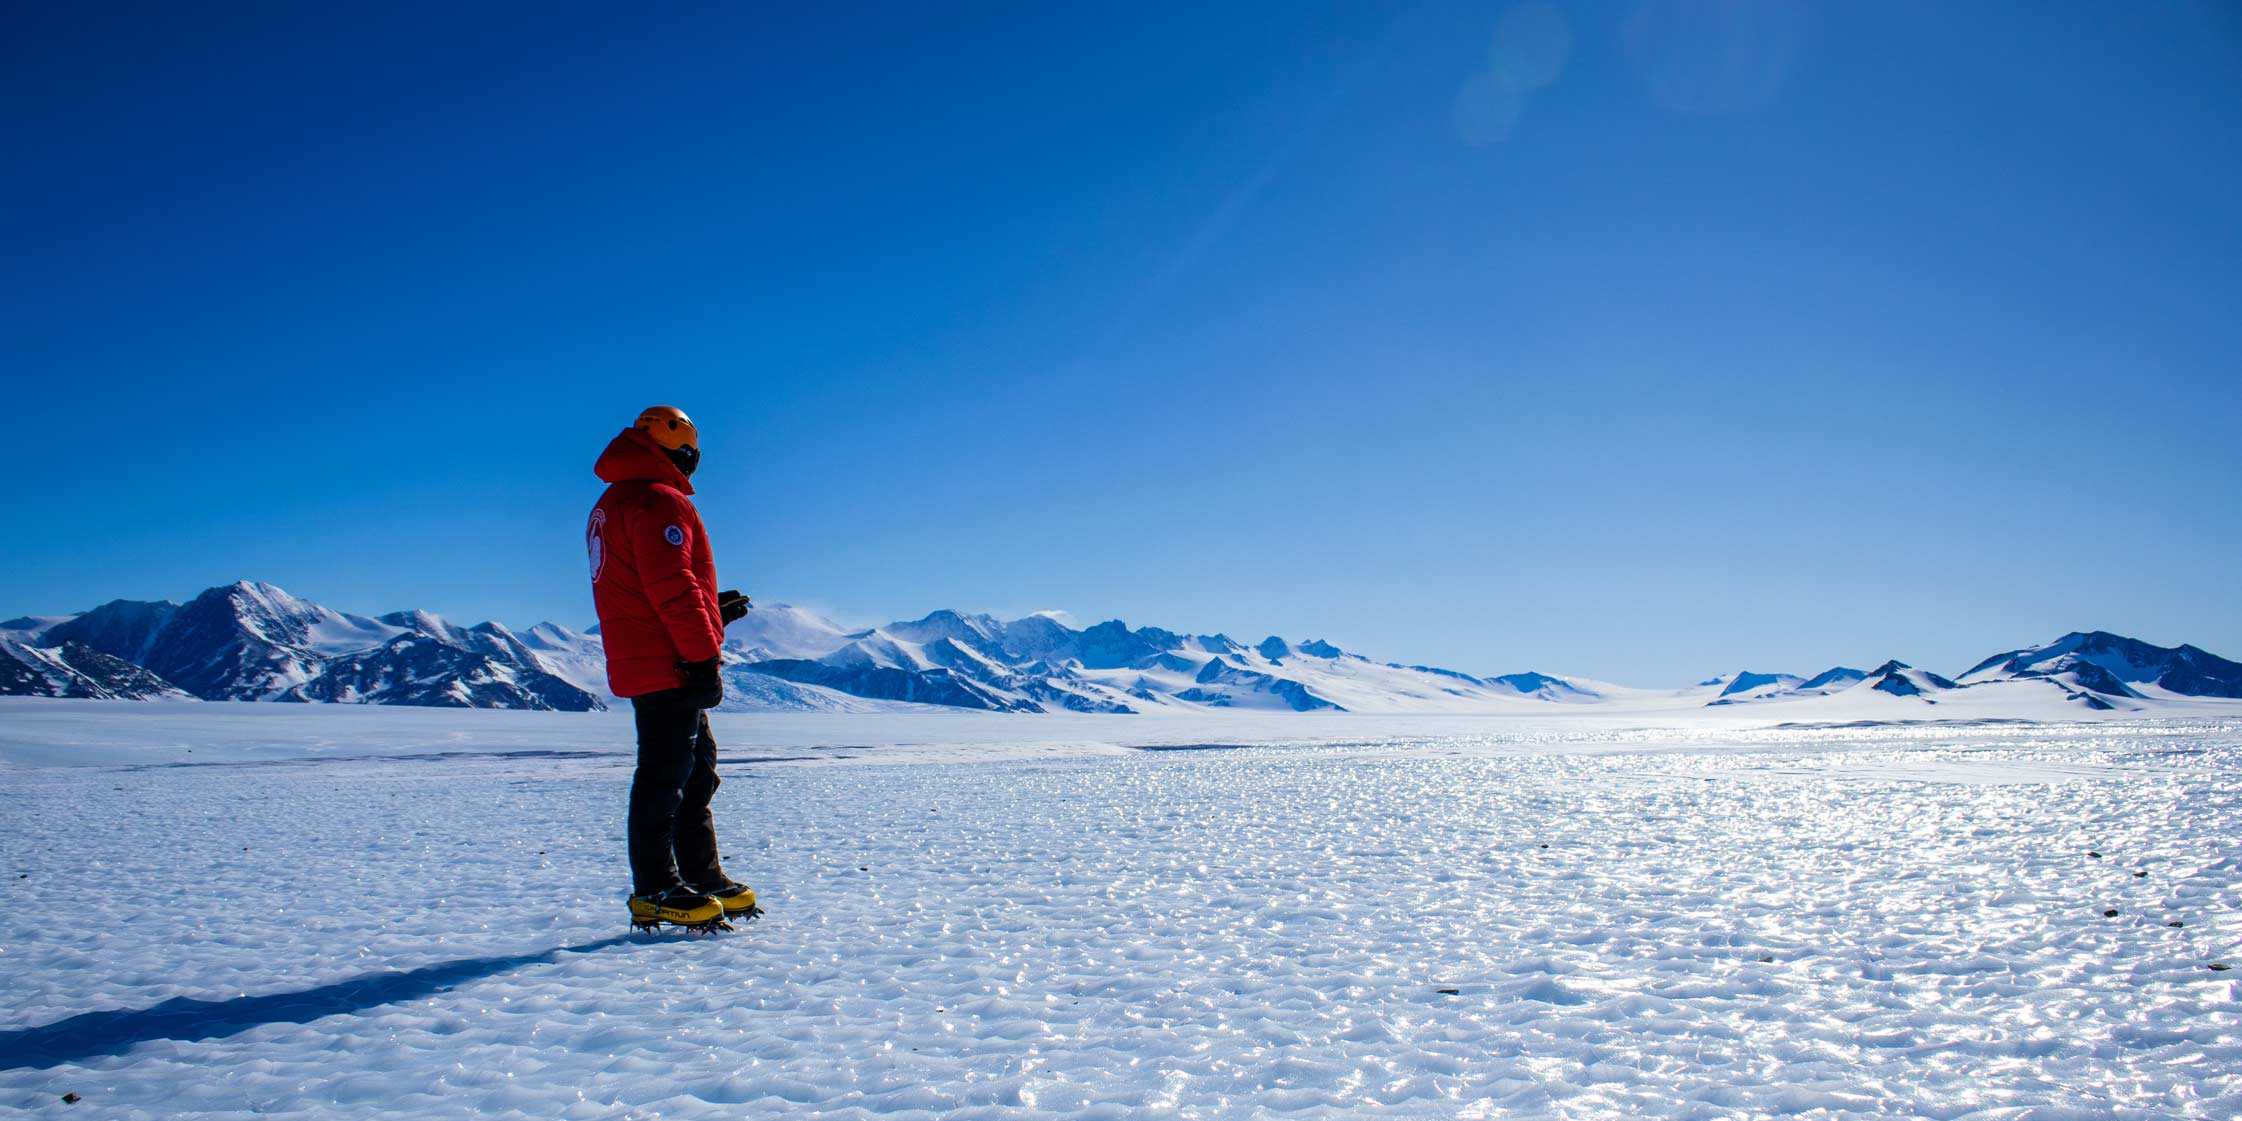 Antarctica snow landscape